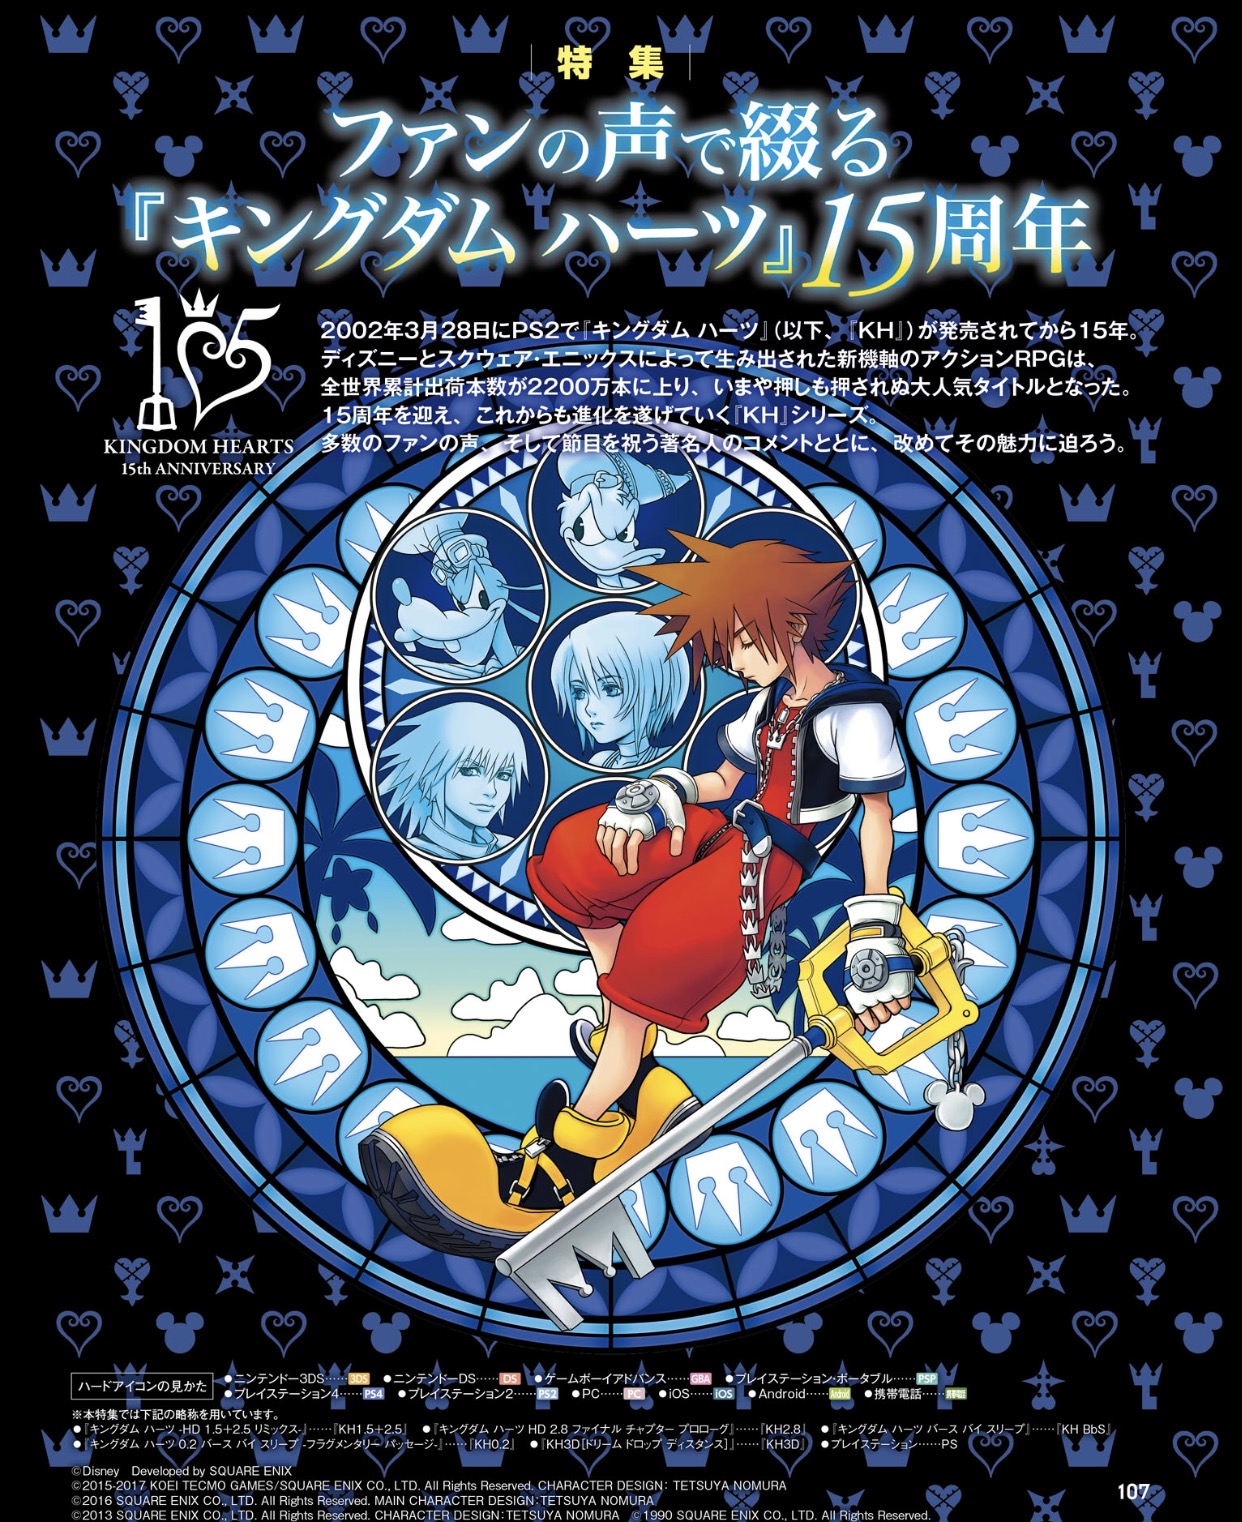 Kingdom Hearts 15th Anniversary Feature In Famitsu Kingdom Hearts Insider